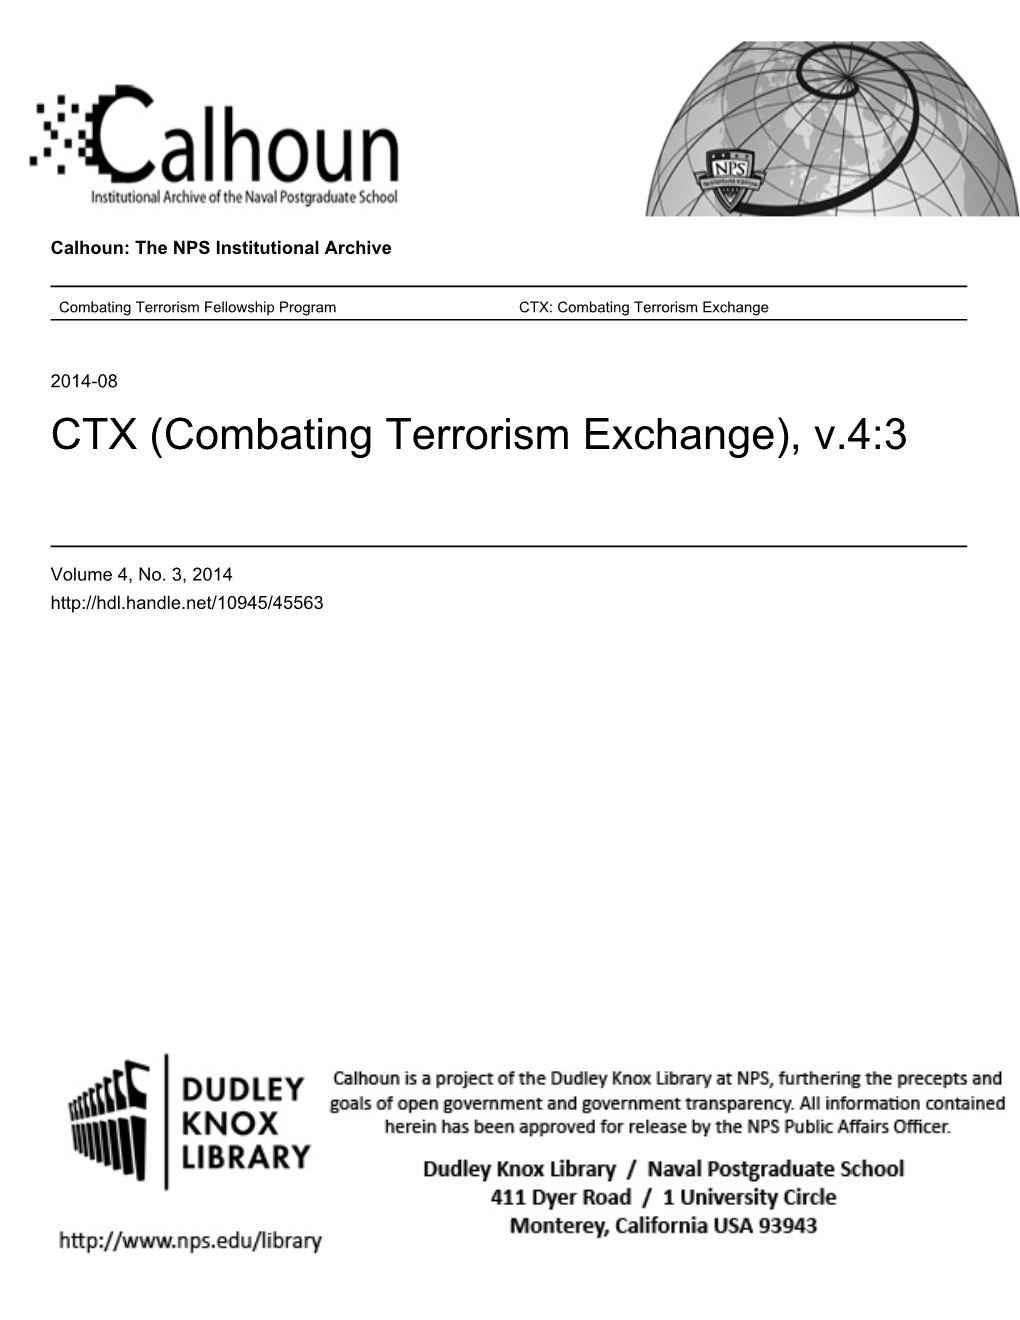 CTX (Combating Terrorism Exchange), V.4:3